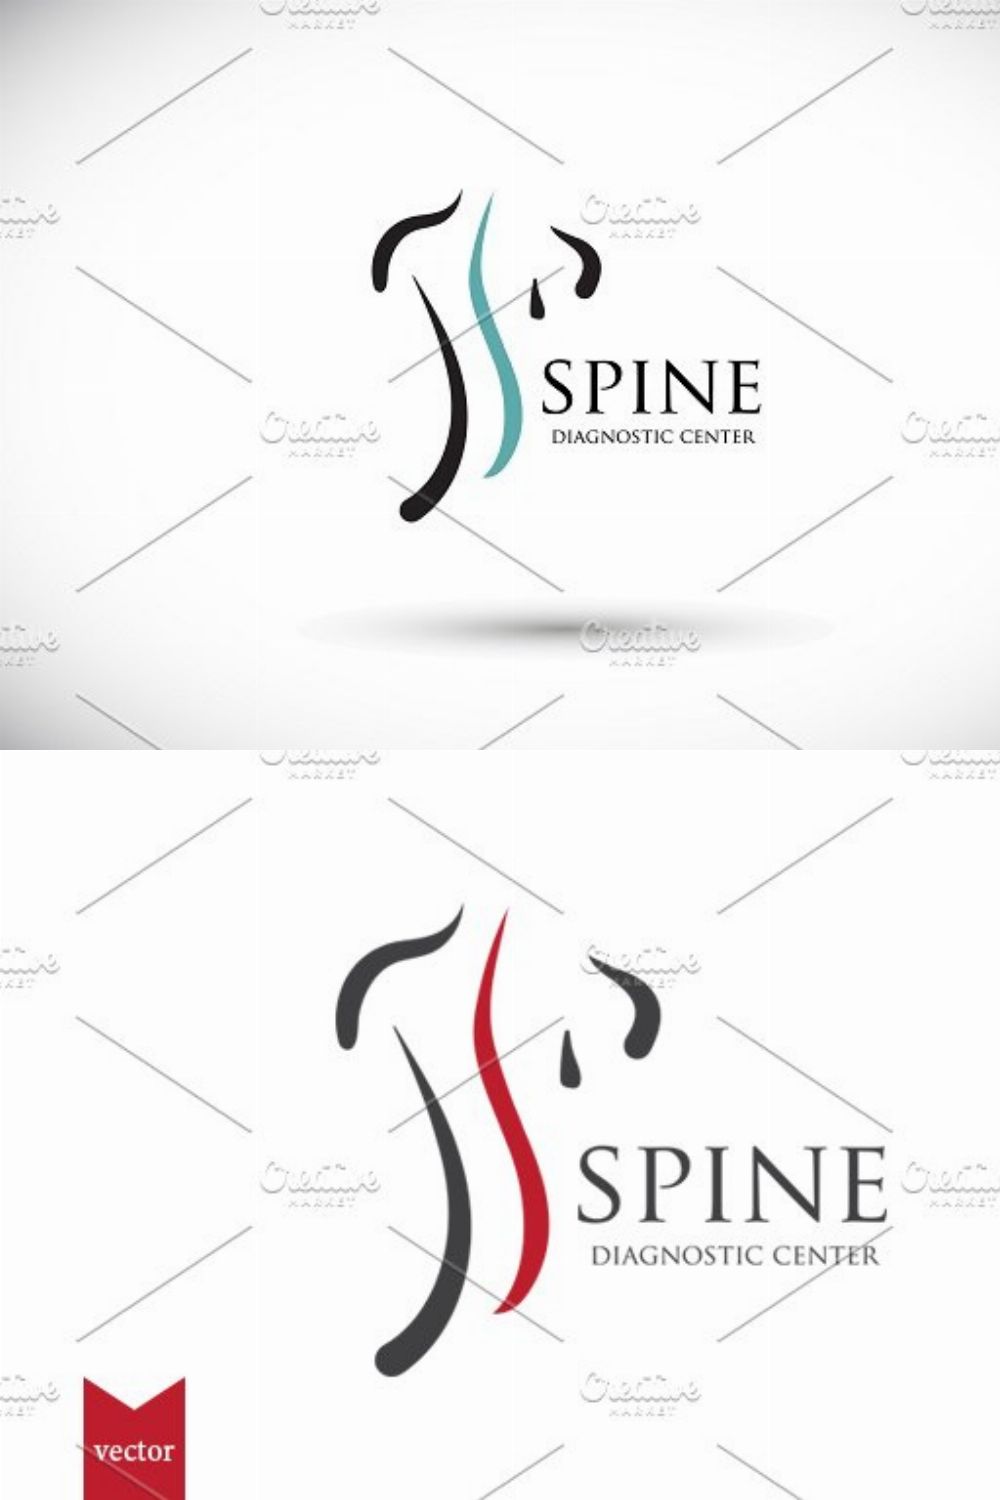 Diagnostic Center Logo Design by Srijon Ashraf Zim on Dribbble